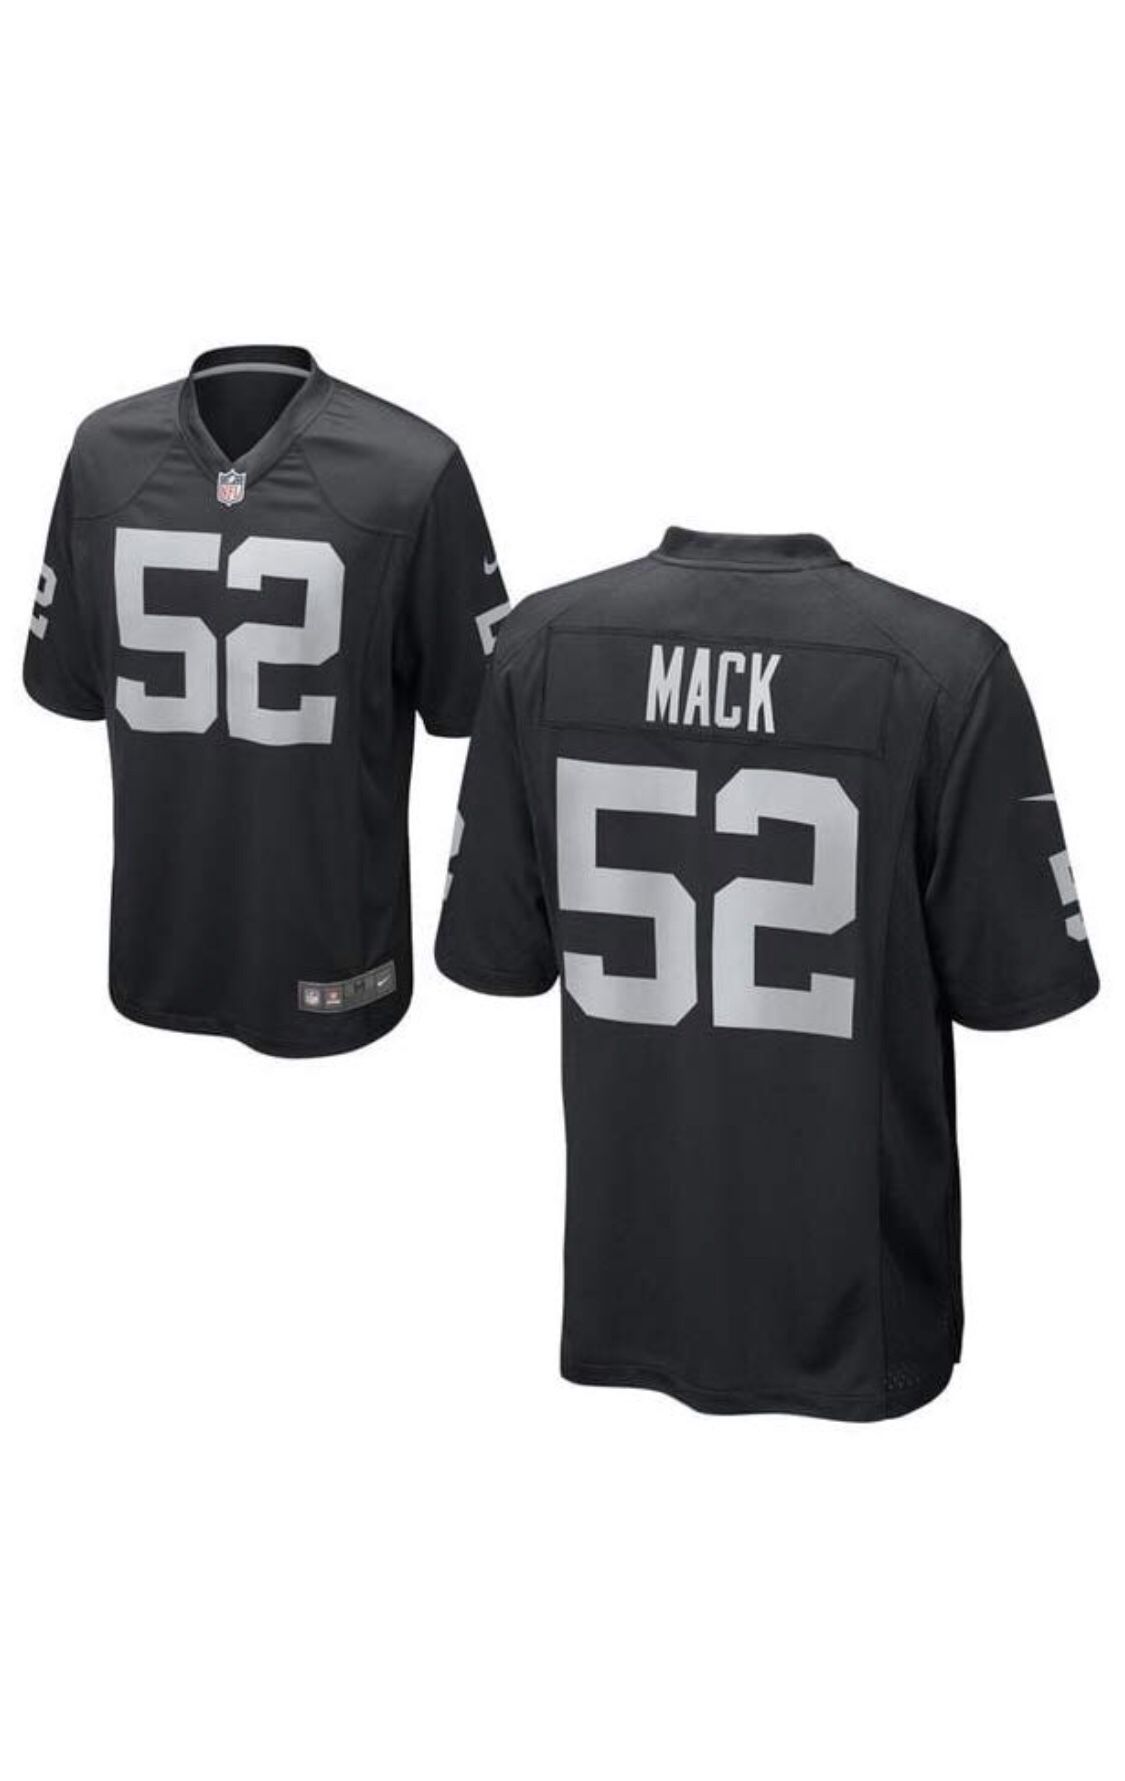 Khalil Mack Raiders Jersey Brand New Never Worn